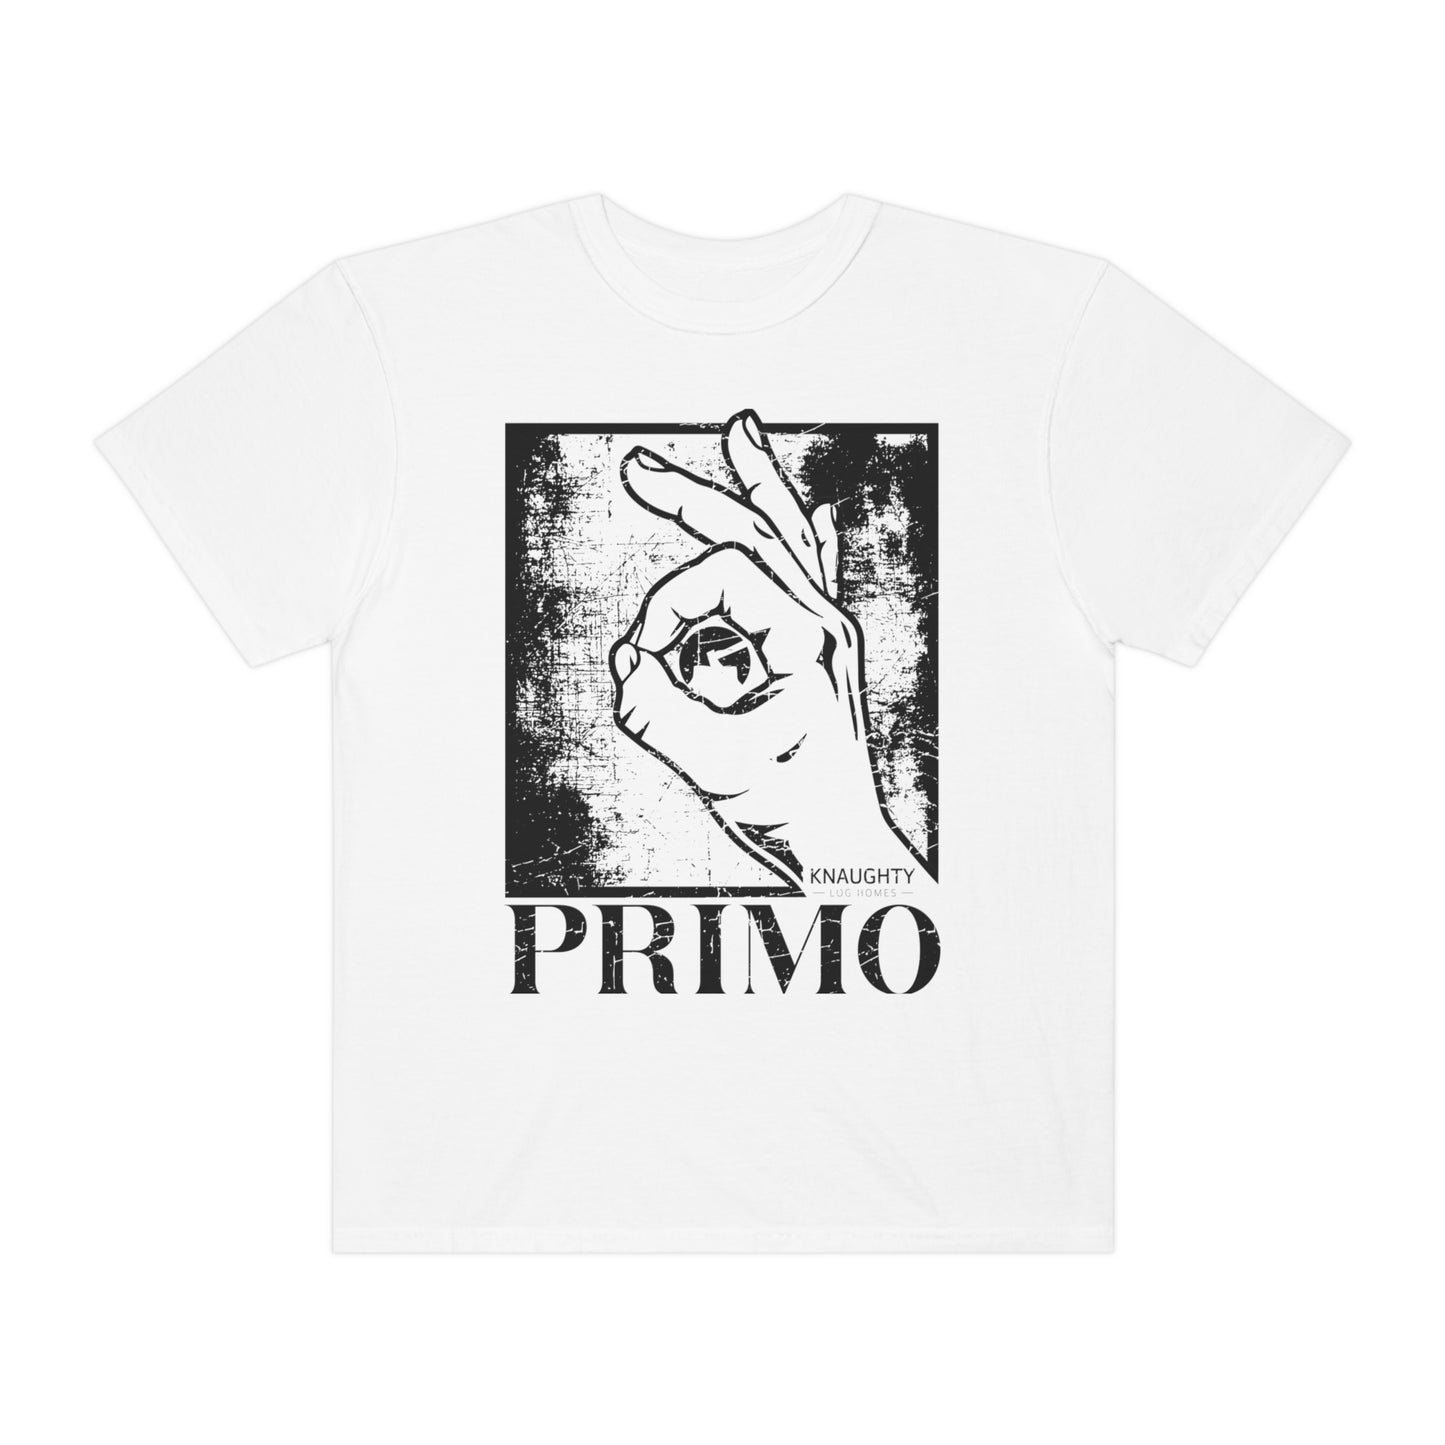 "PRIMO" Graphic T-Shirt